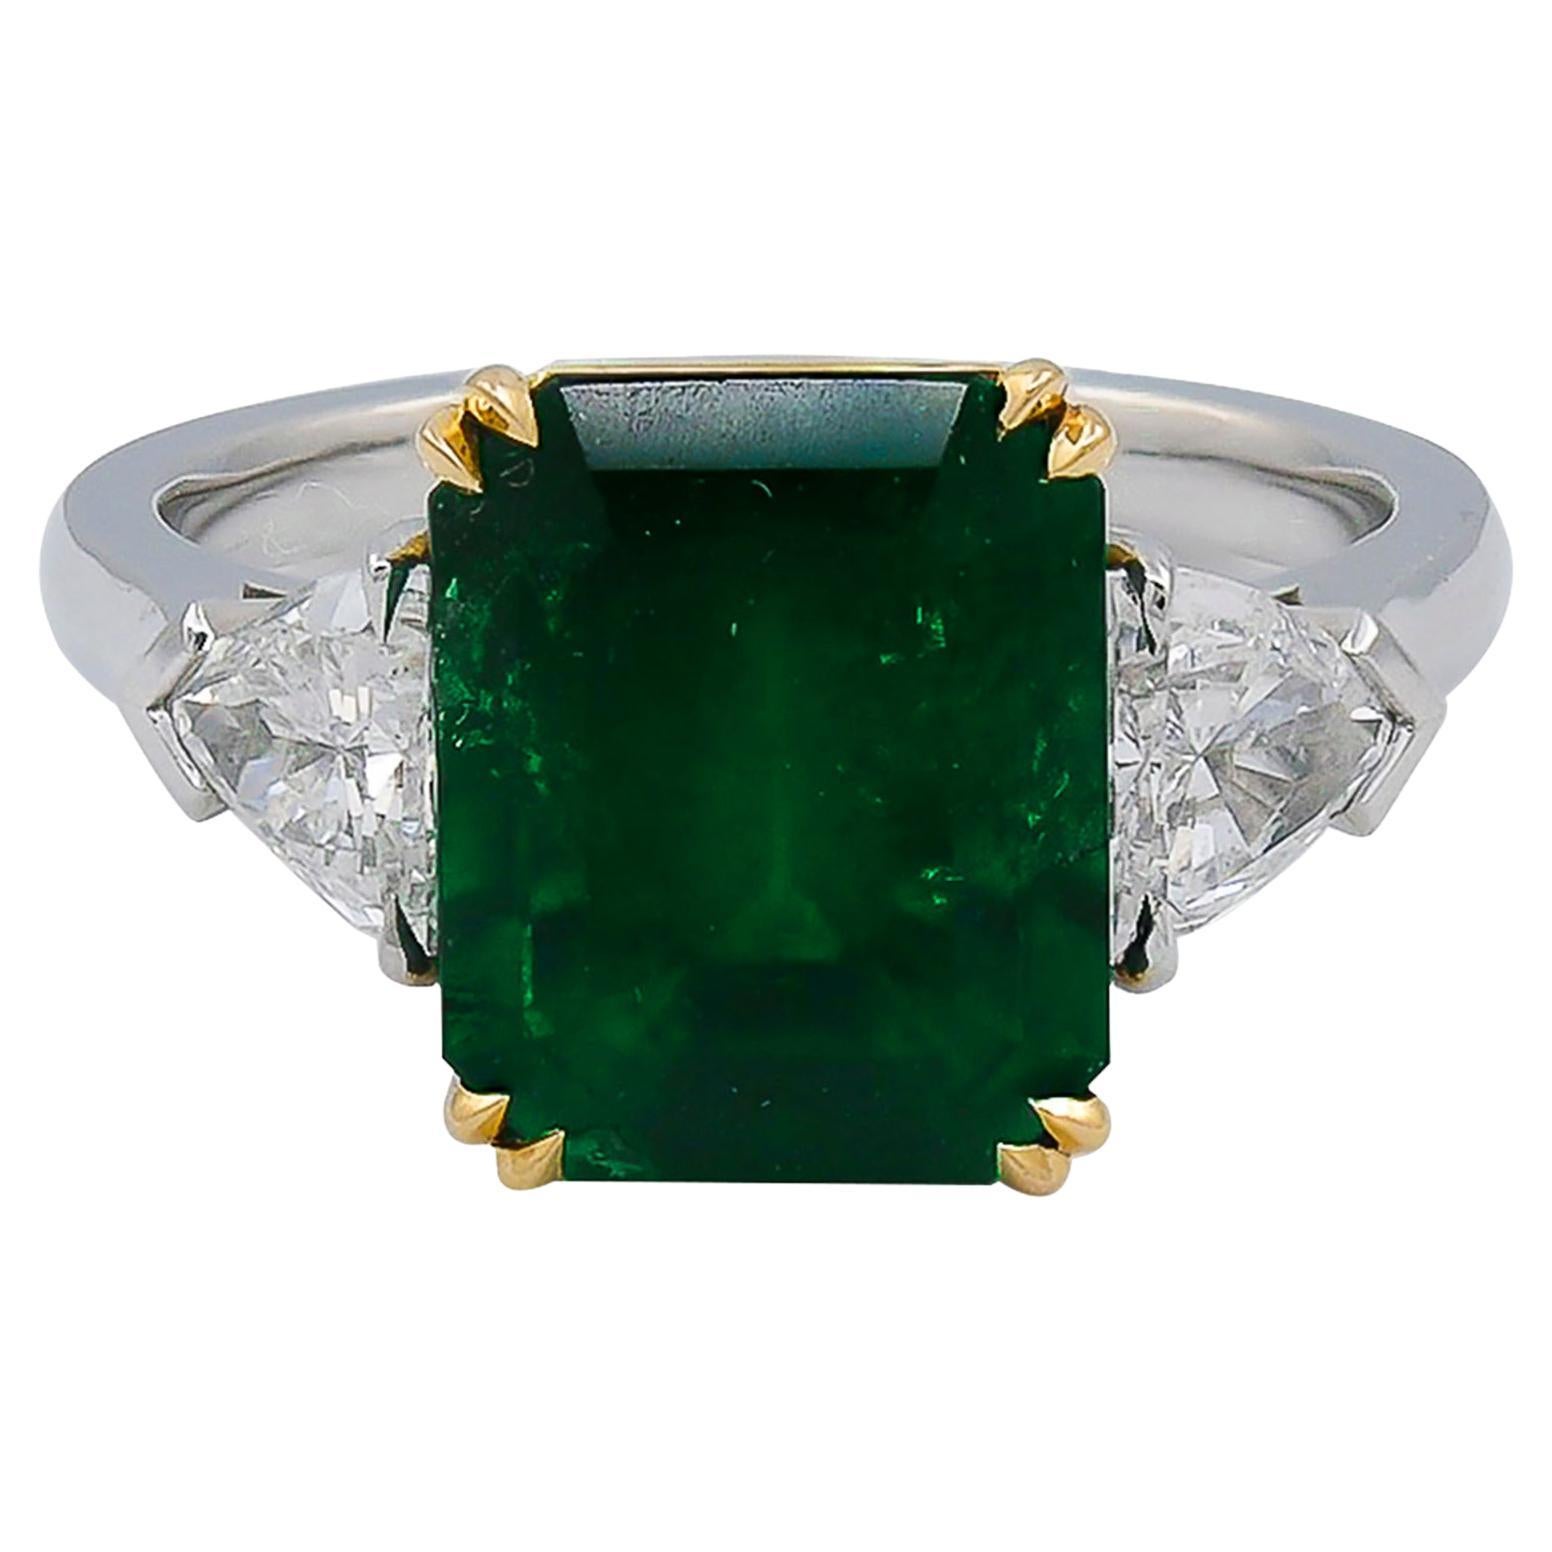 Spectra Fine Jewelry GRS Certified 4.09 Carat Colombian Emerald Diamond Ring